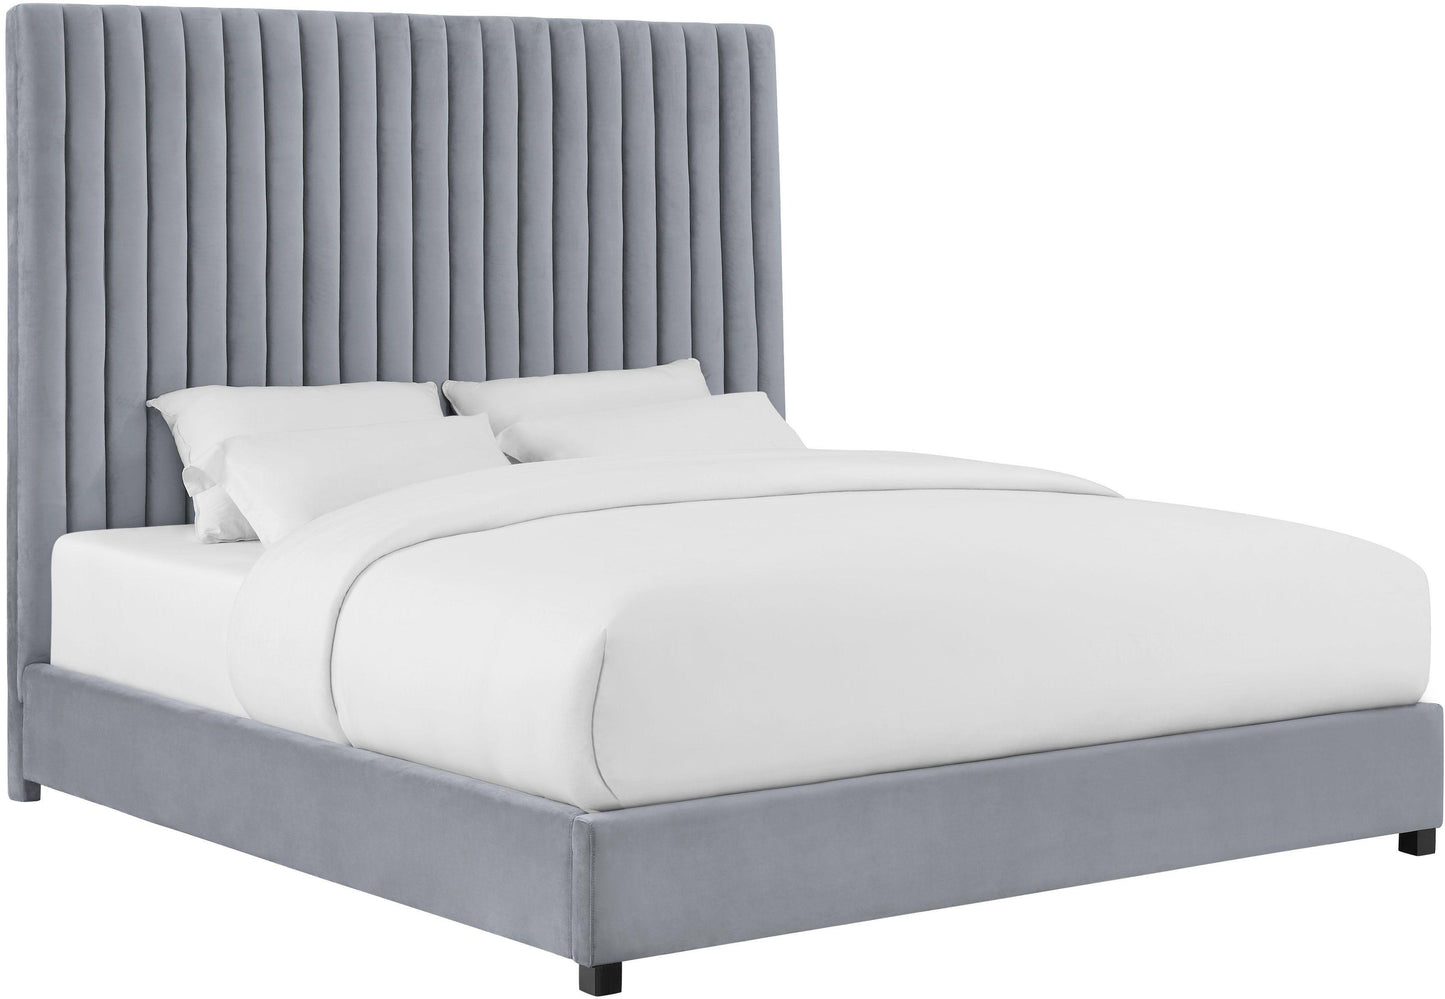 Tov Furniture Arabelle Grey Bed Queen